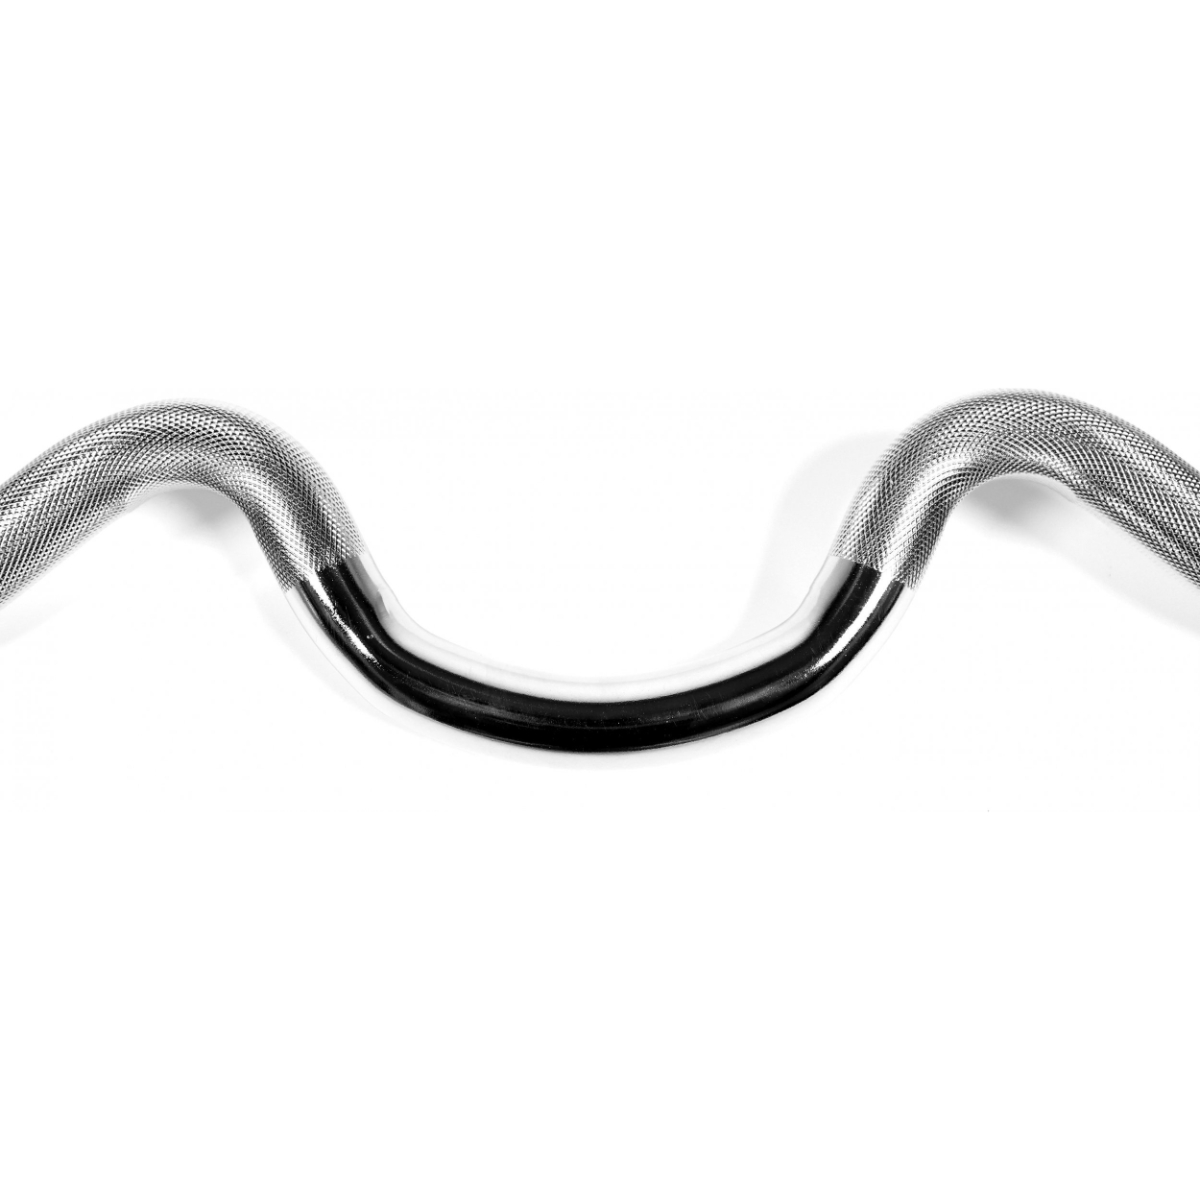 ZIPRO Curl-Hubstange 120cm 28 mm Hantelstange, Silber